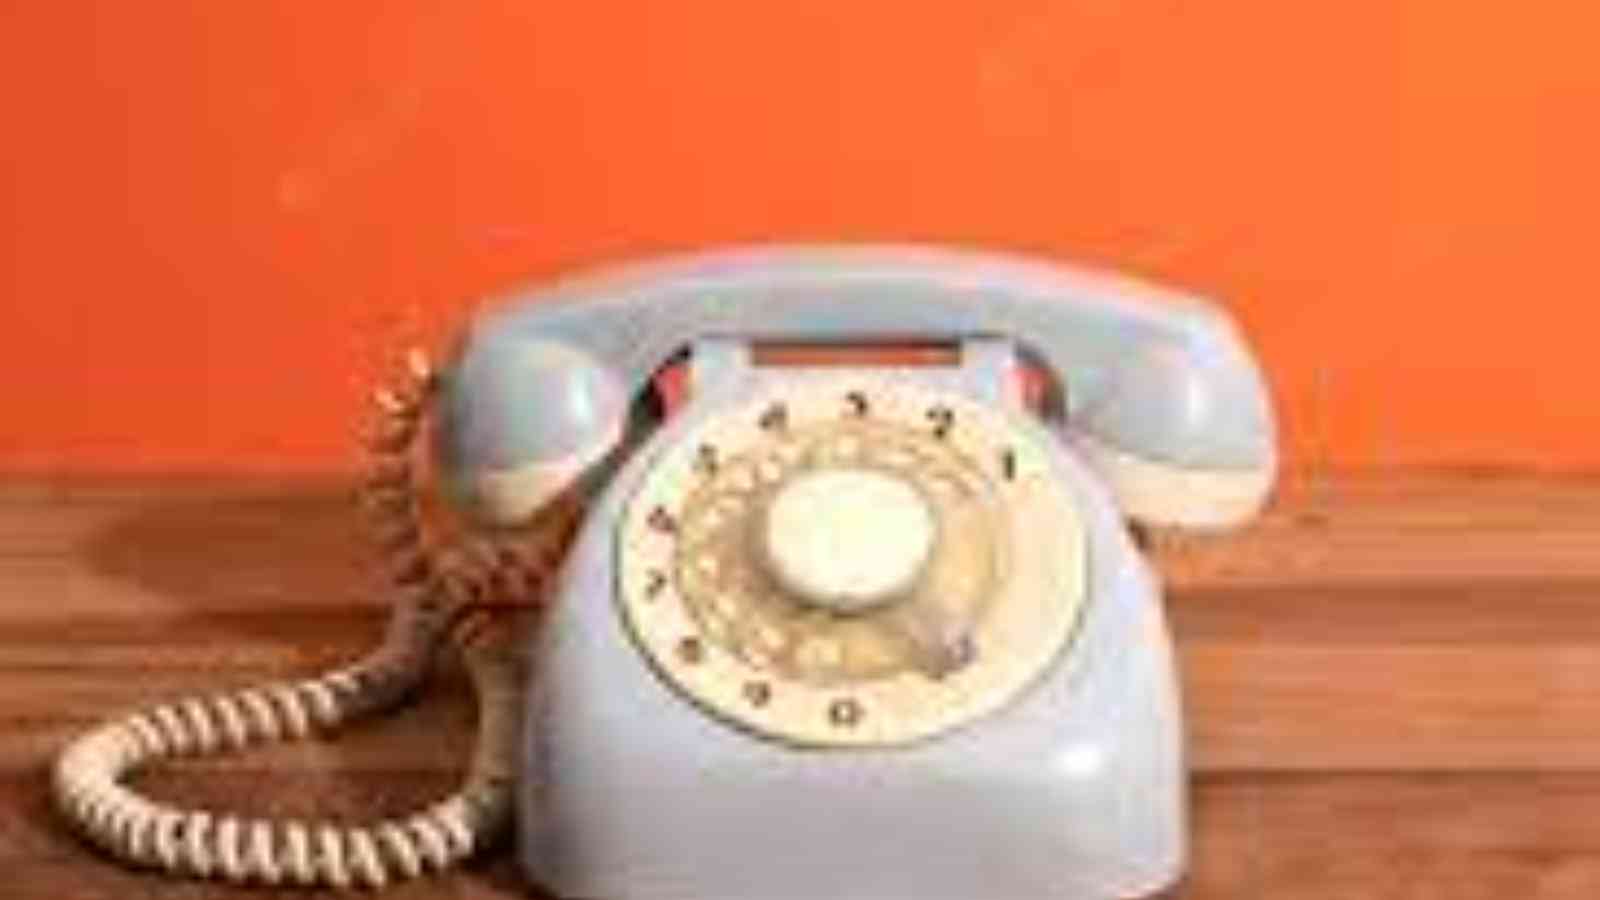 National Landline Telephone Day 2023: Date, History, Activities